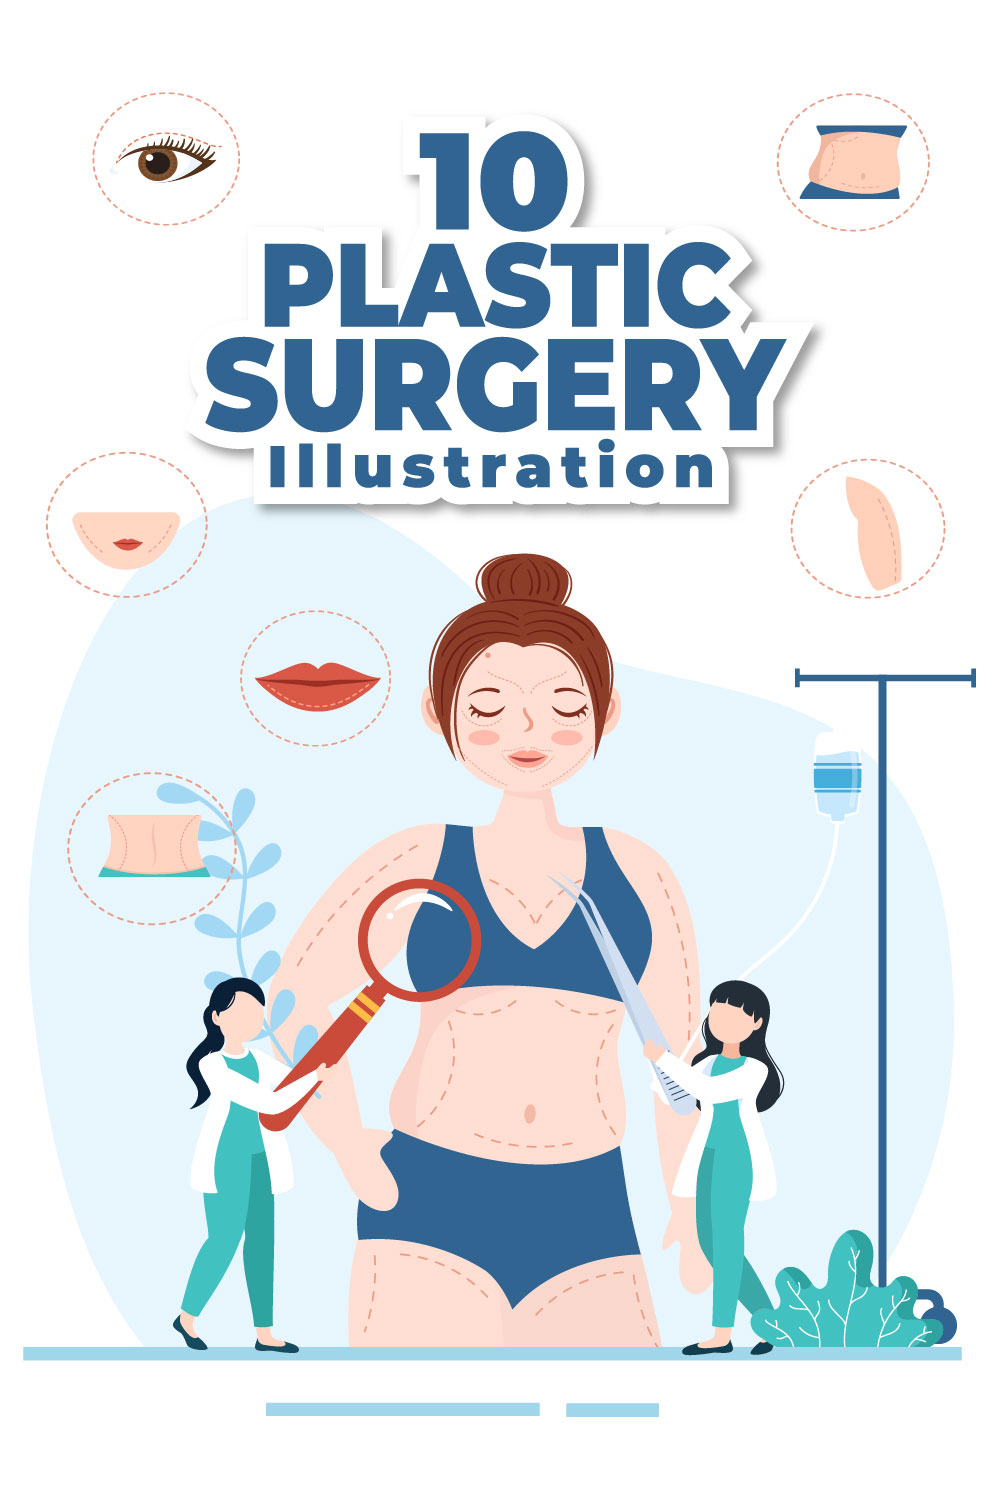 Plastic Surgery Flat Illustration pinterest image.